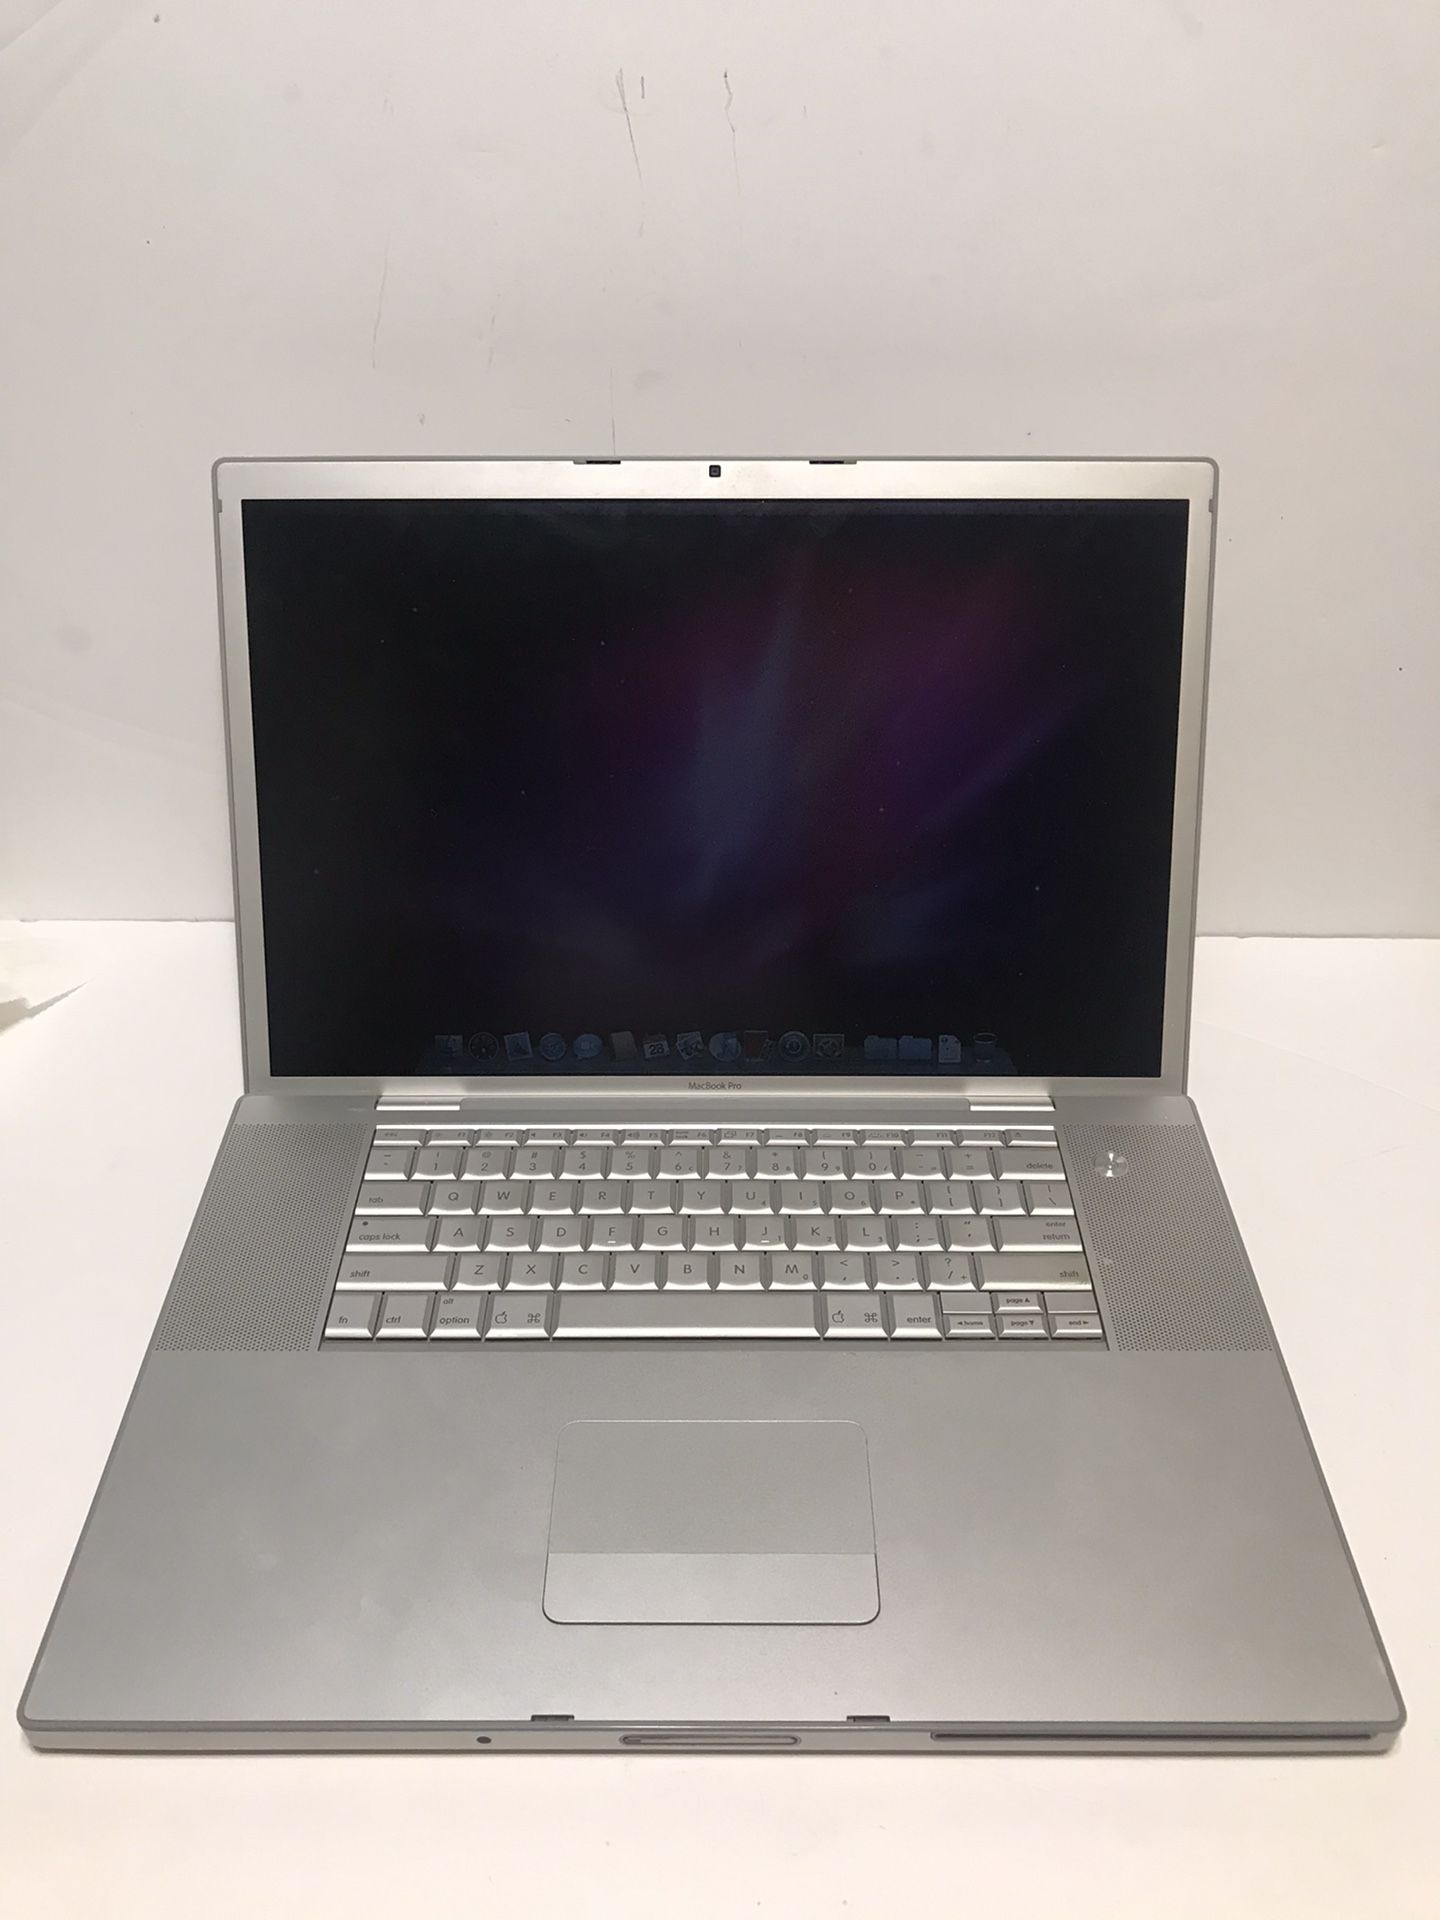 Apple MacBook Pro A1212 17" Laptop Intel Core 2 Duo 2.33GHz 2GB RAM 200GB HDD